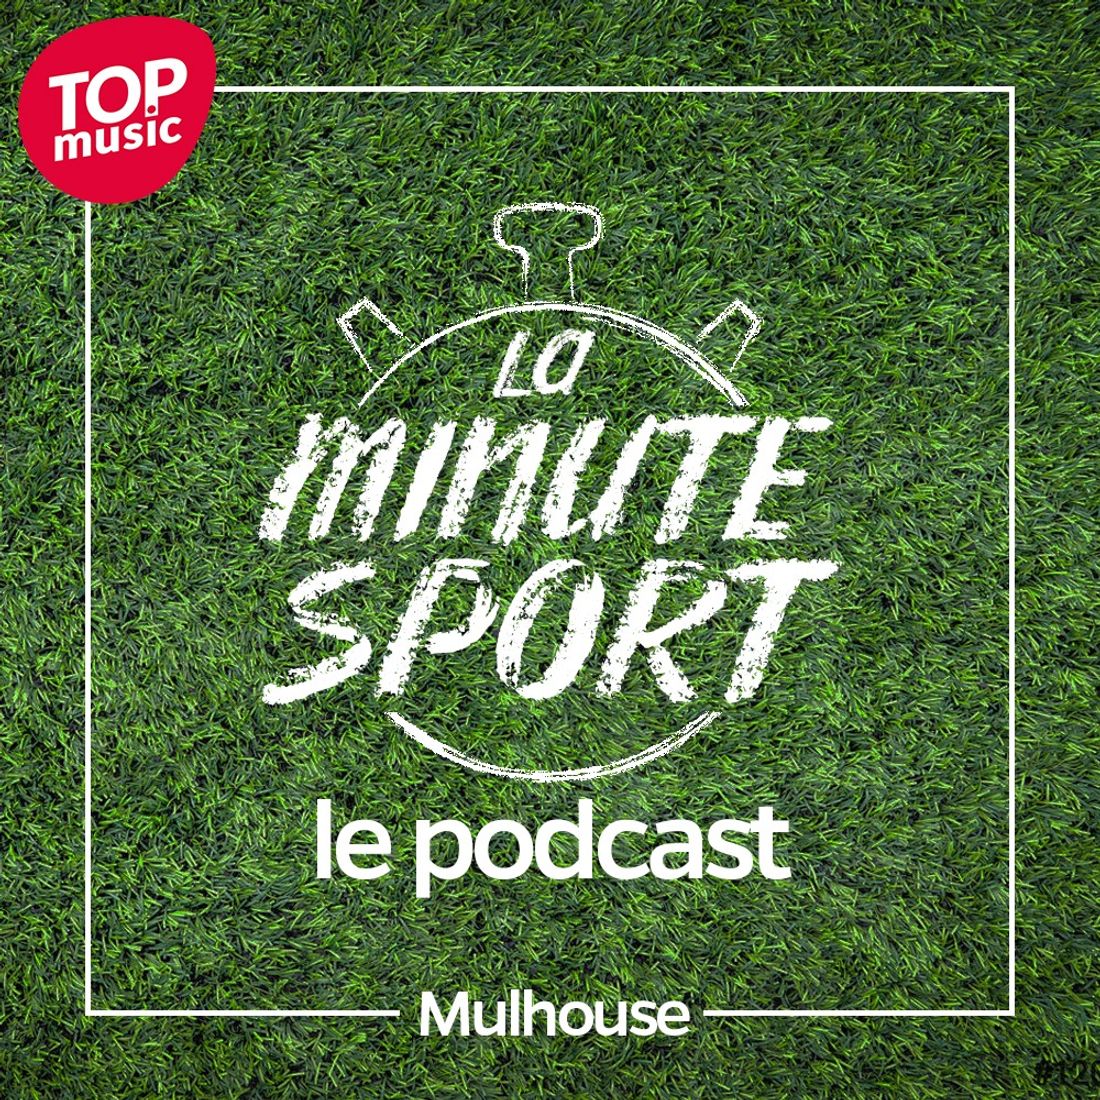 La Minute Sport - Mulhouse - EP11